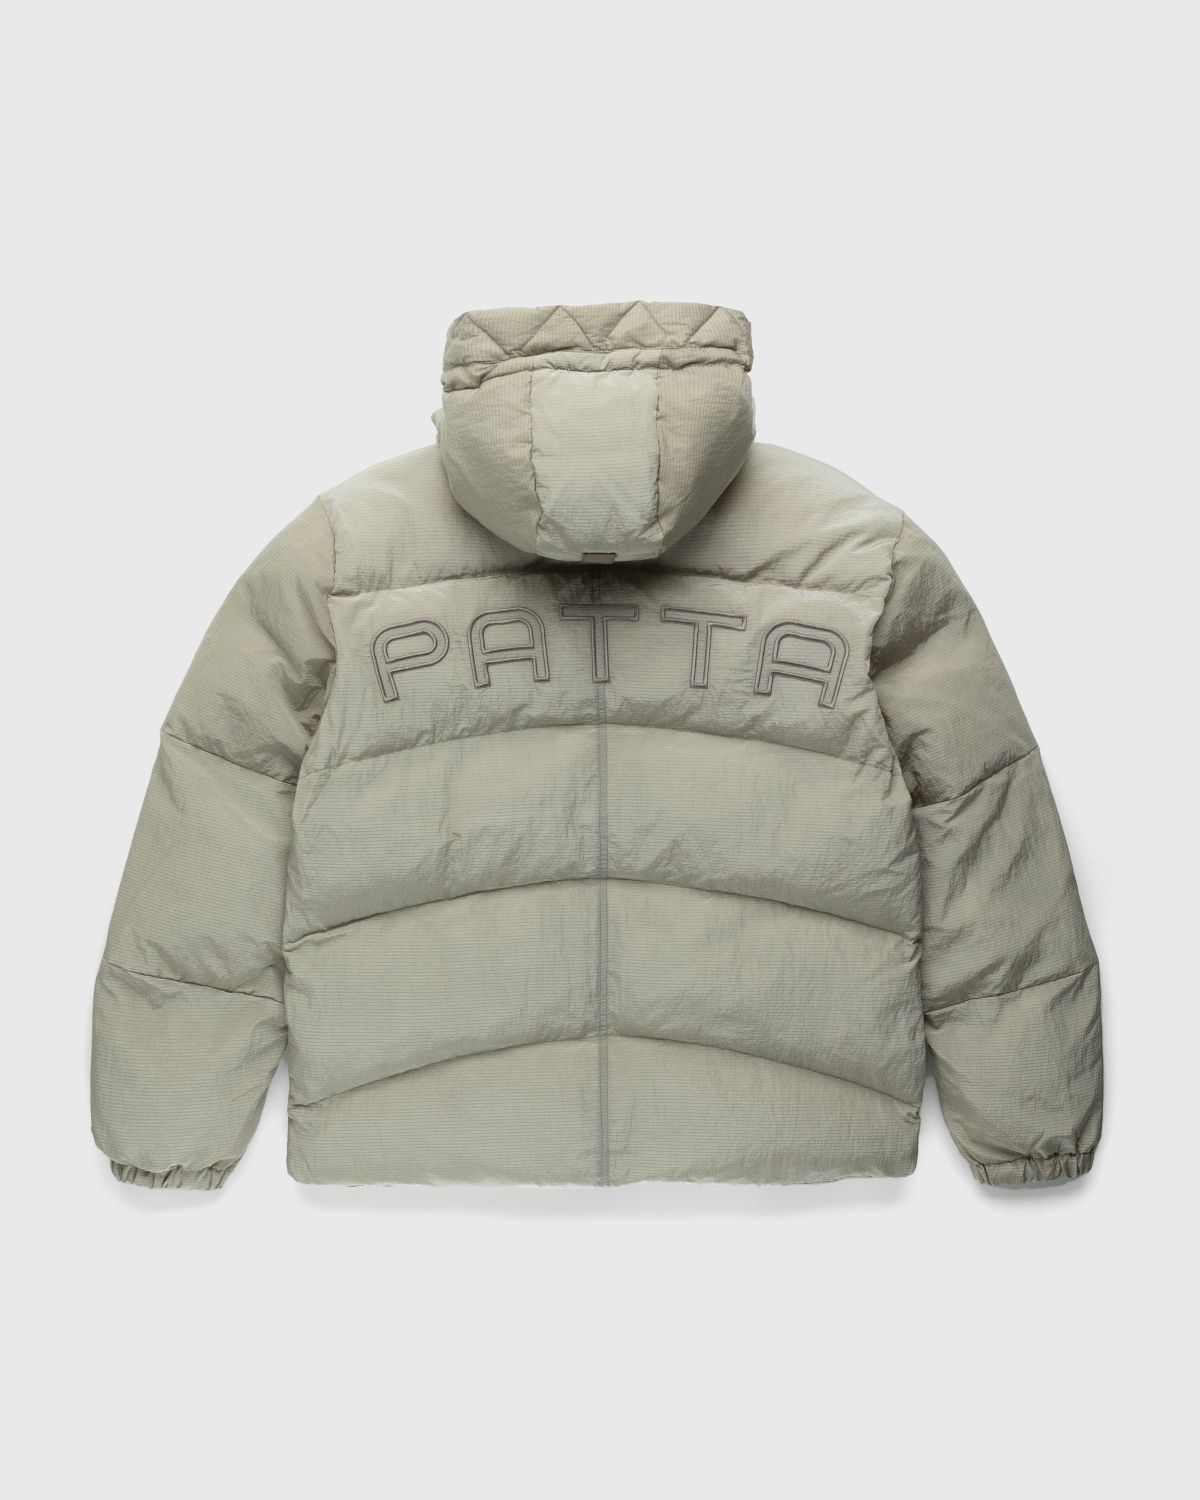 Patta – Ripstop Puffer Jacket Seneca Rock - Down Jackets - Grey - Image 2